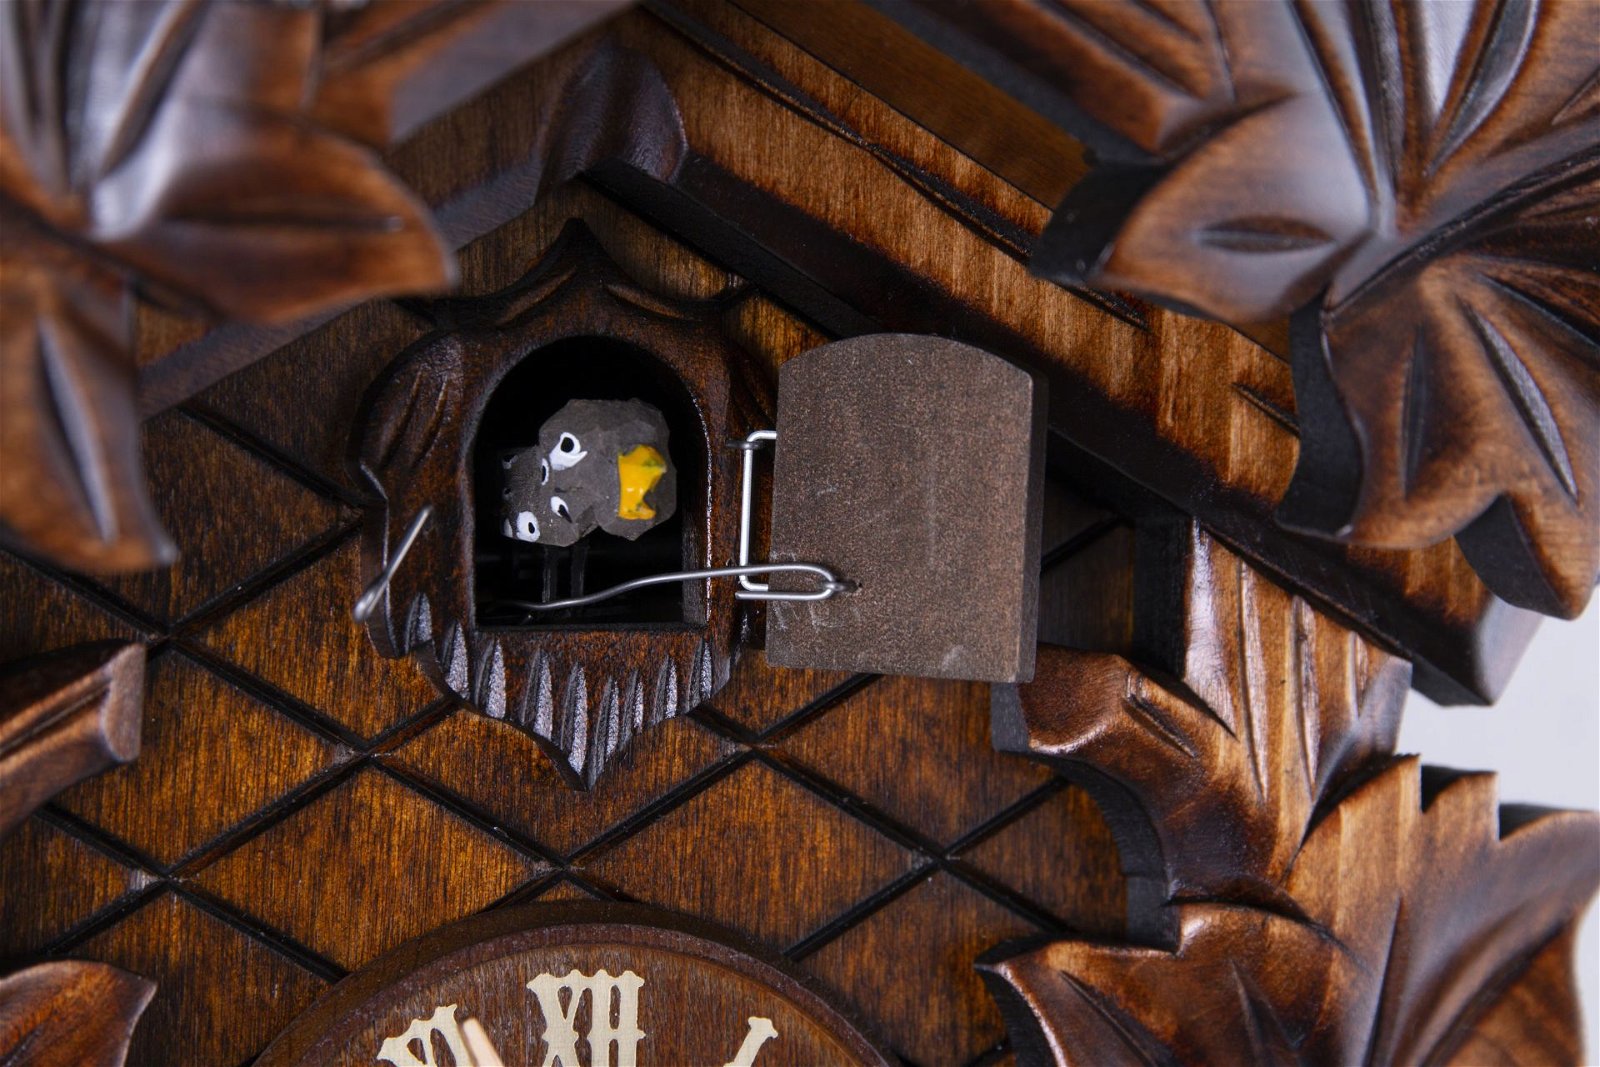 Reloj de cuco estilo “Madera tallada” movimiento mecánico de 8 días 34cm de Anton Schneider